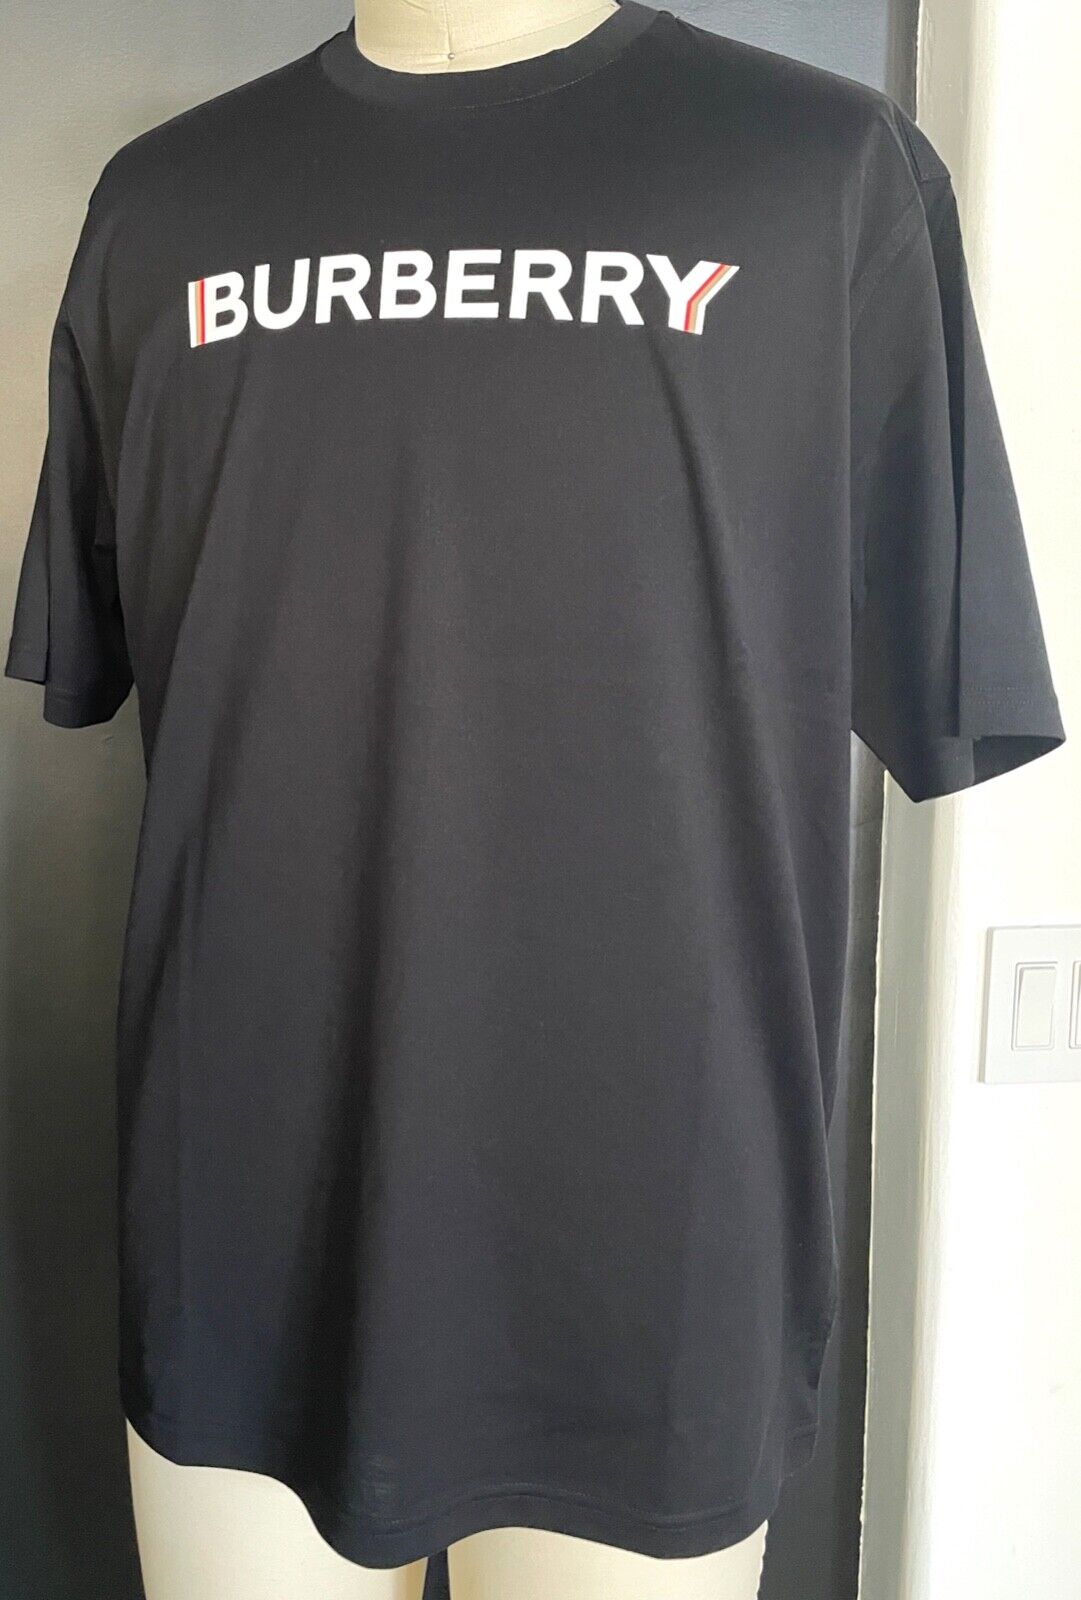 Pre-owned Burberry 8053010 Graphic Print Ellison Black T-shirt, S, M